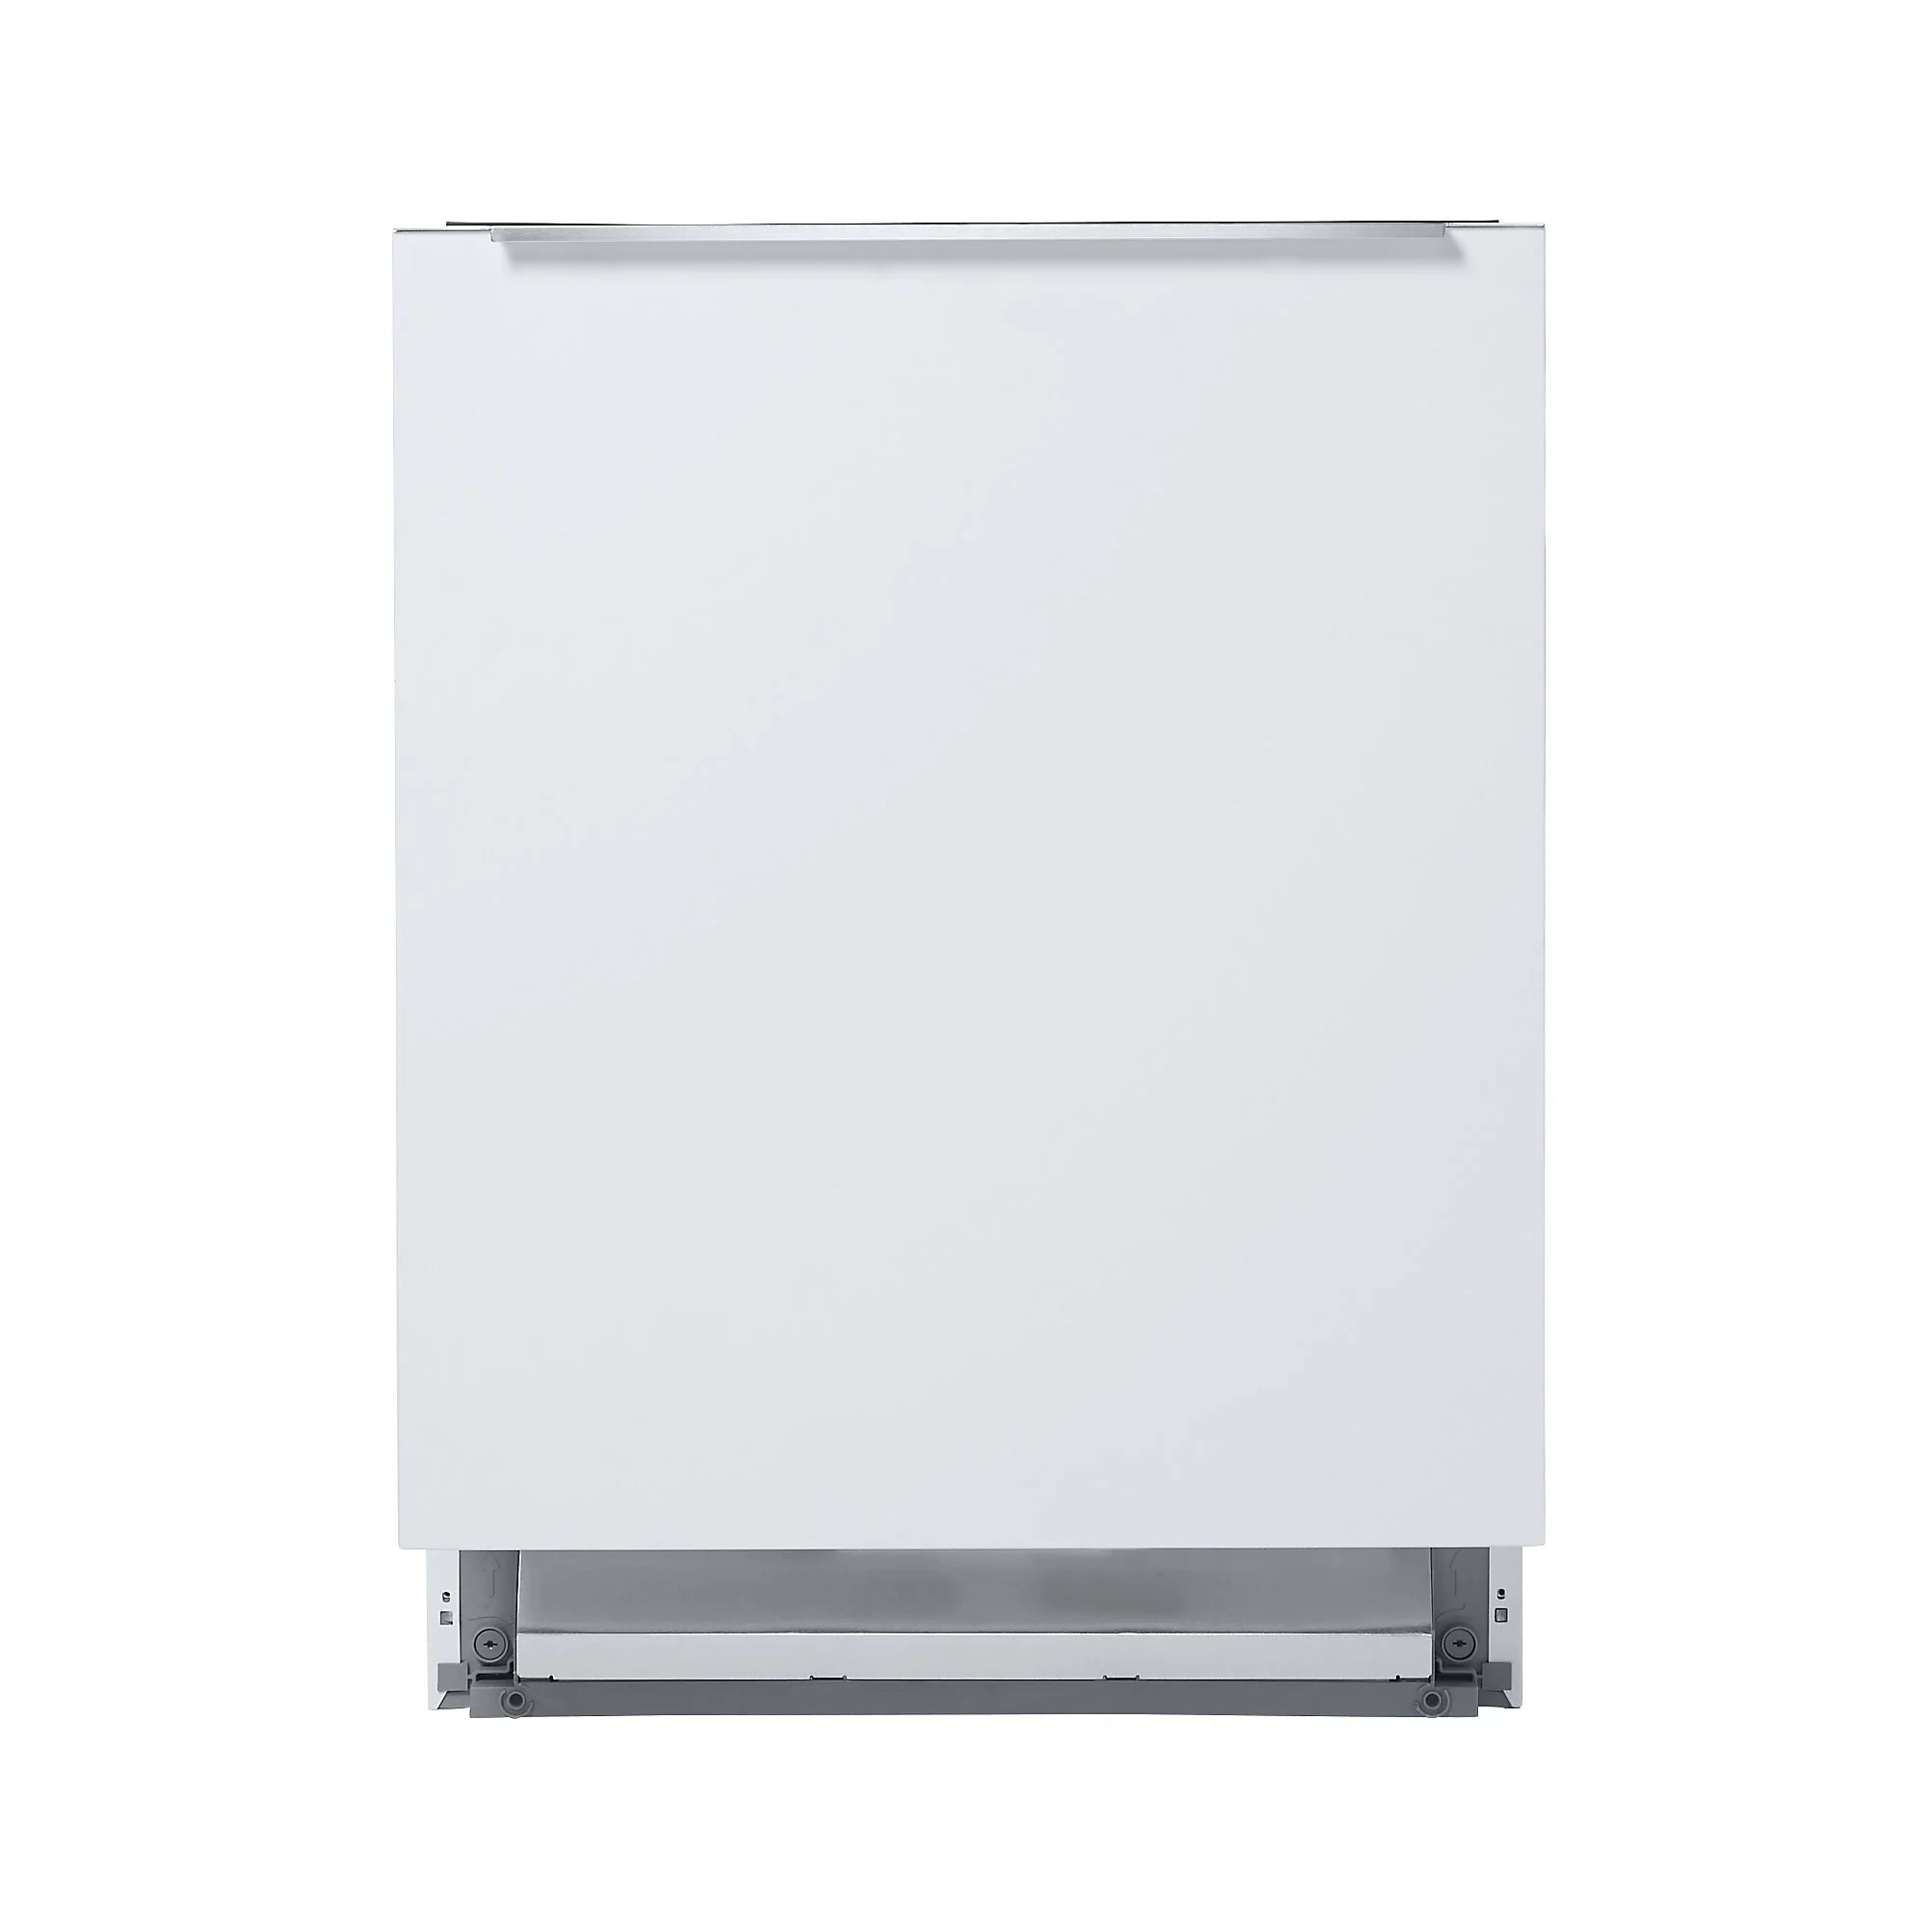 Beko DIN15Q10 Integrated Full size Dishwasher - Black & white 1520